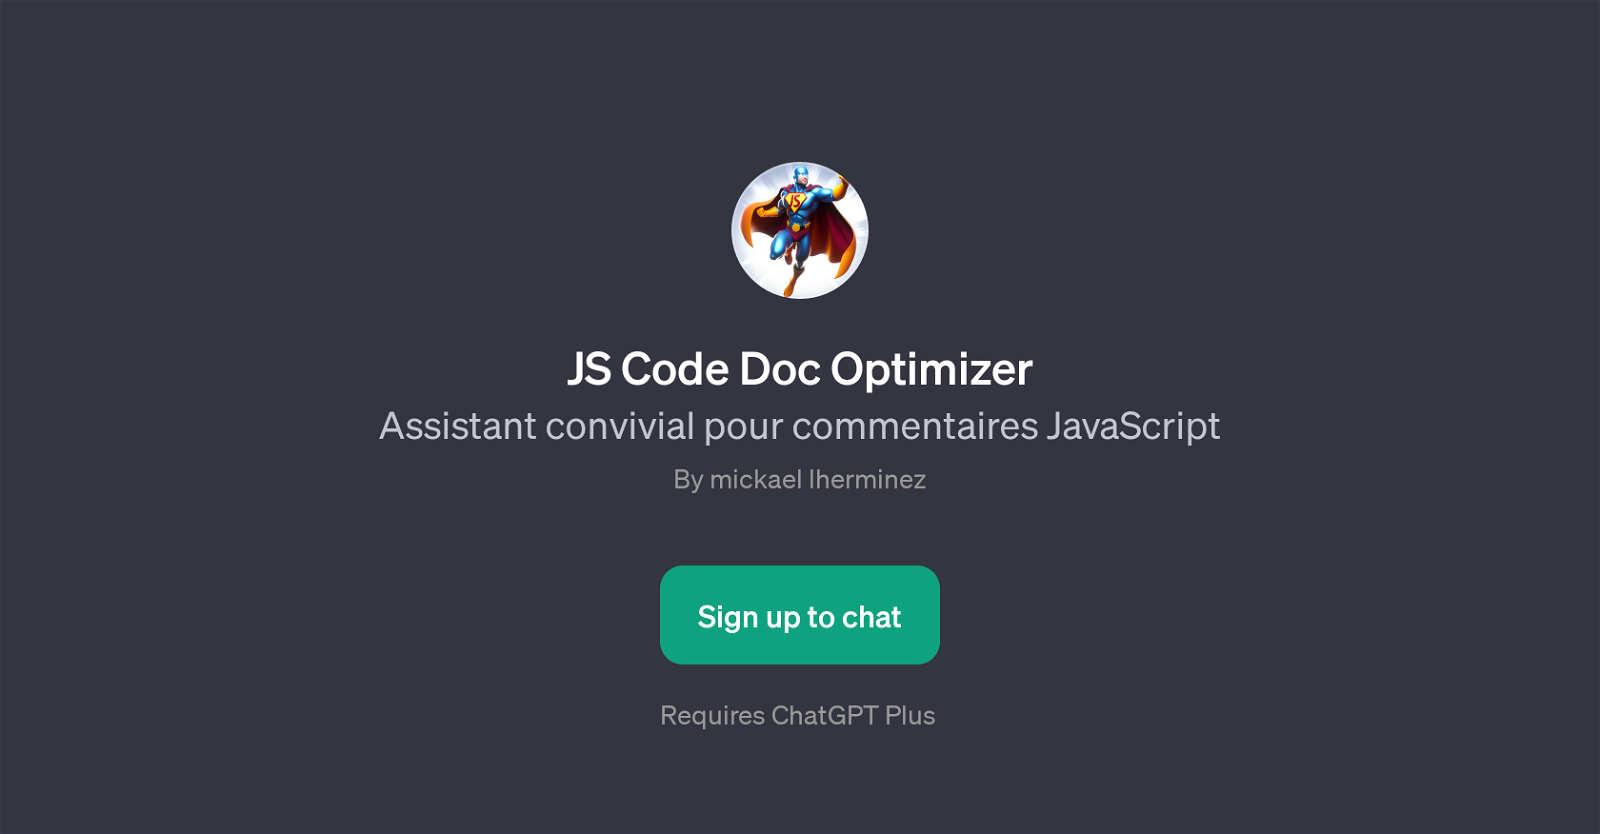 JS Code Doc Optimizer website